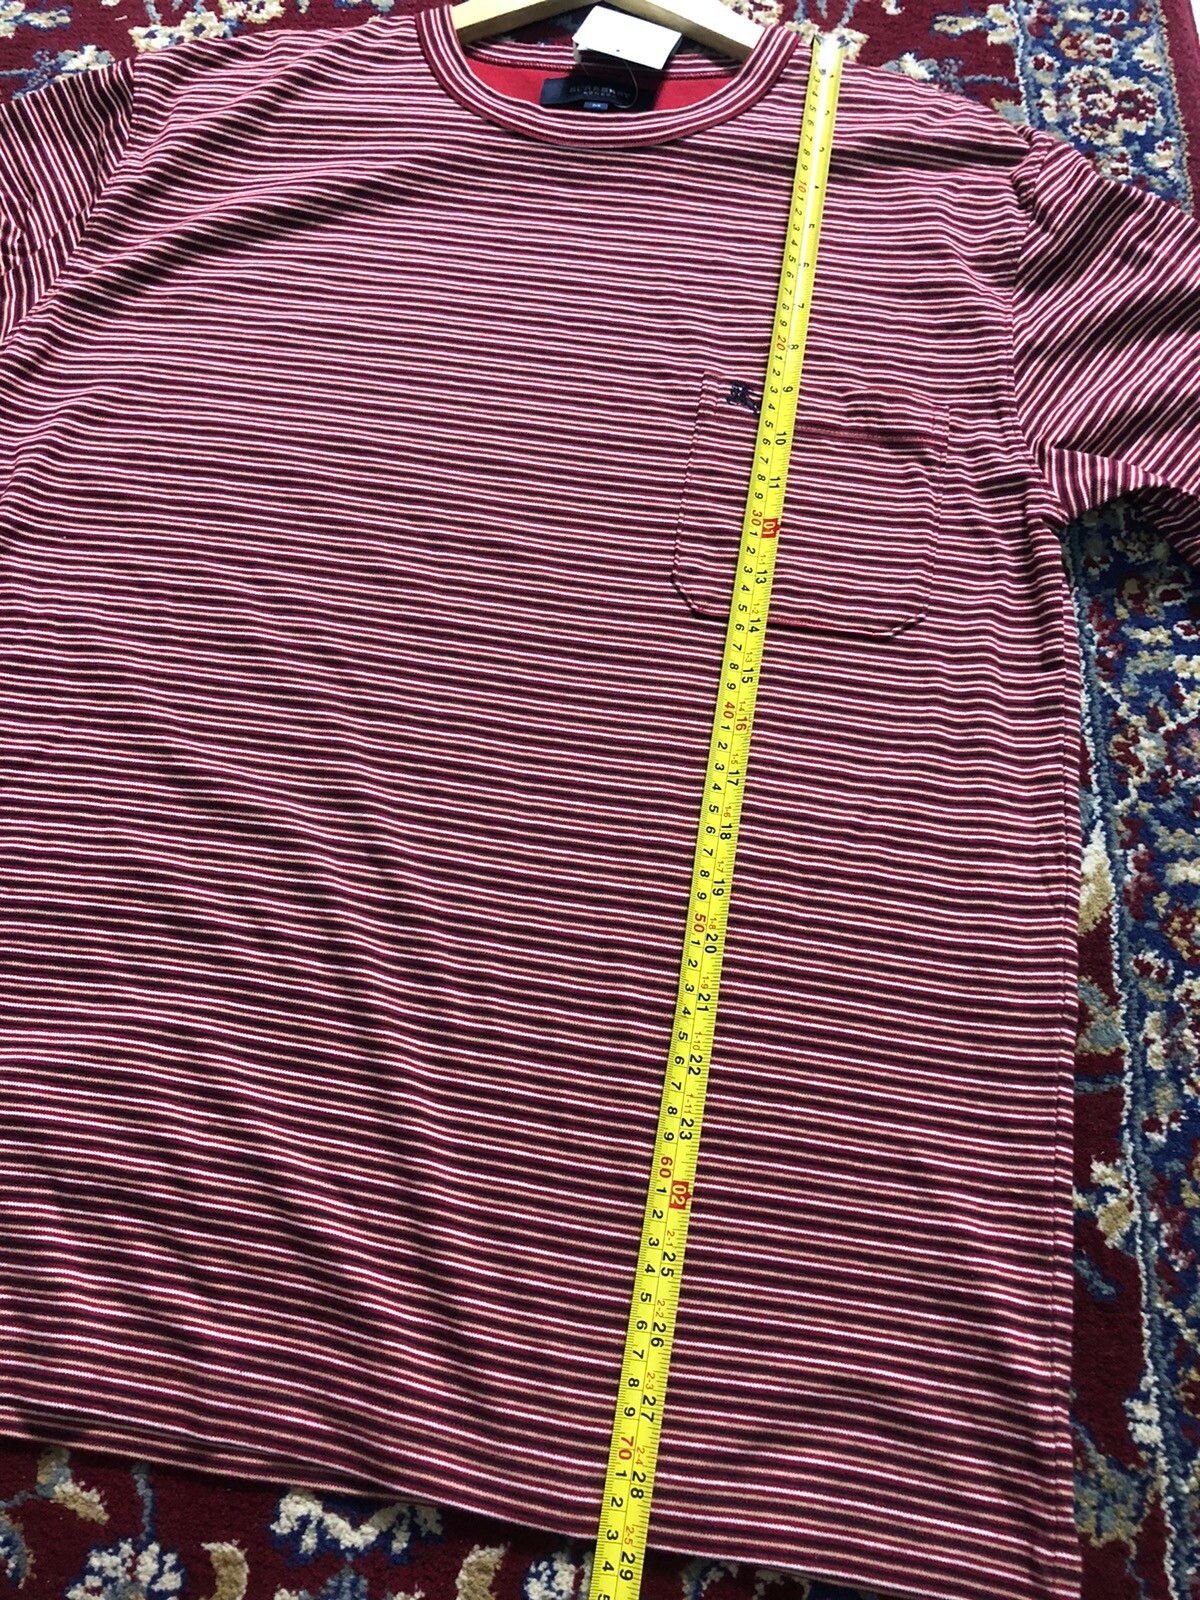 Burberry London Stripes Pocket Tee Long Sleeve Shirt - 10